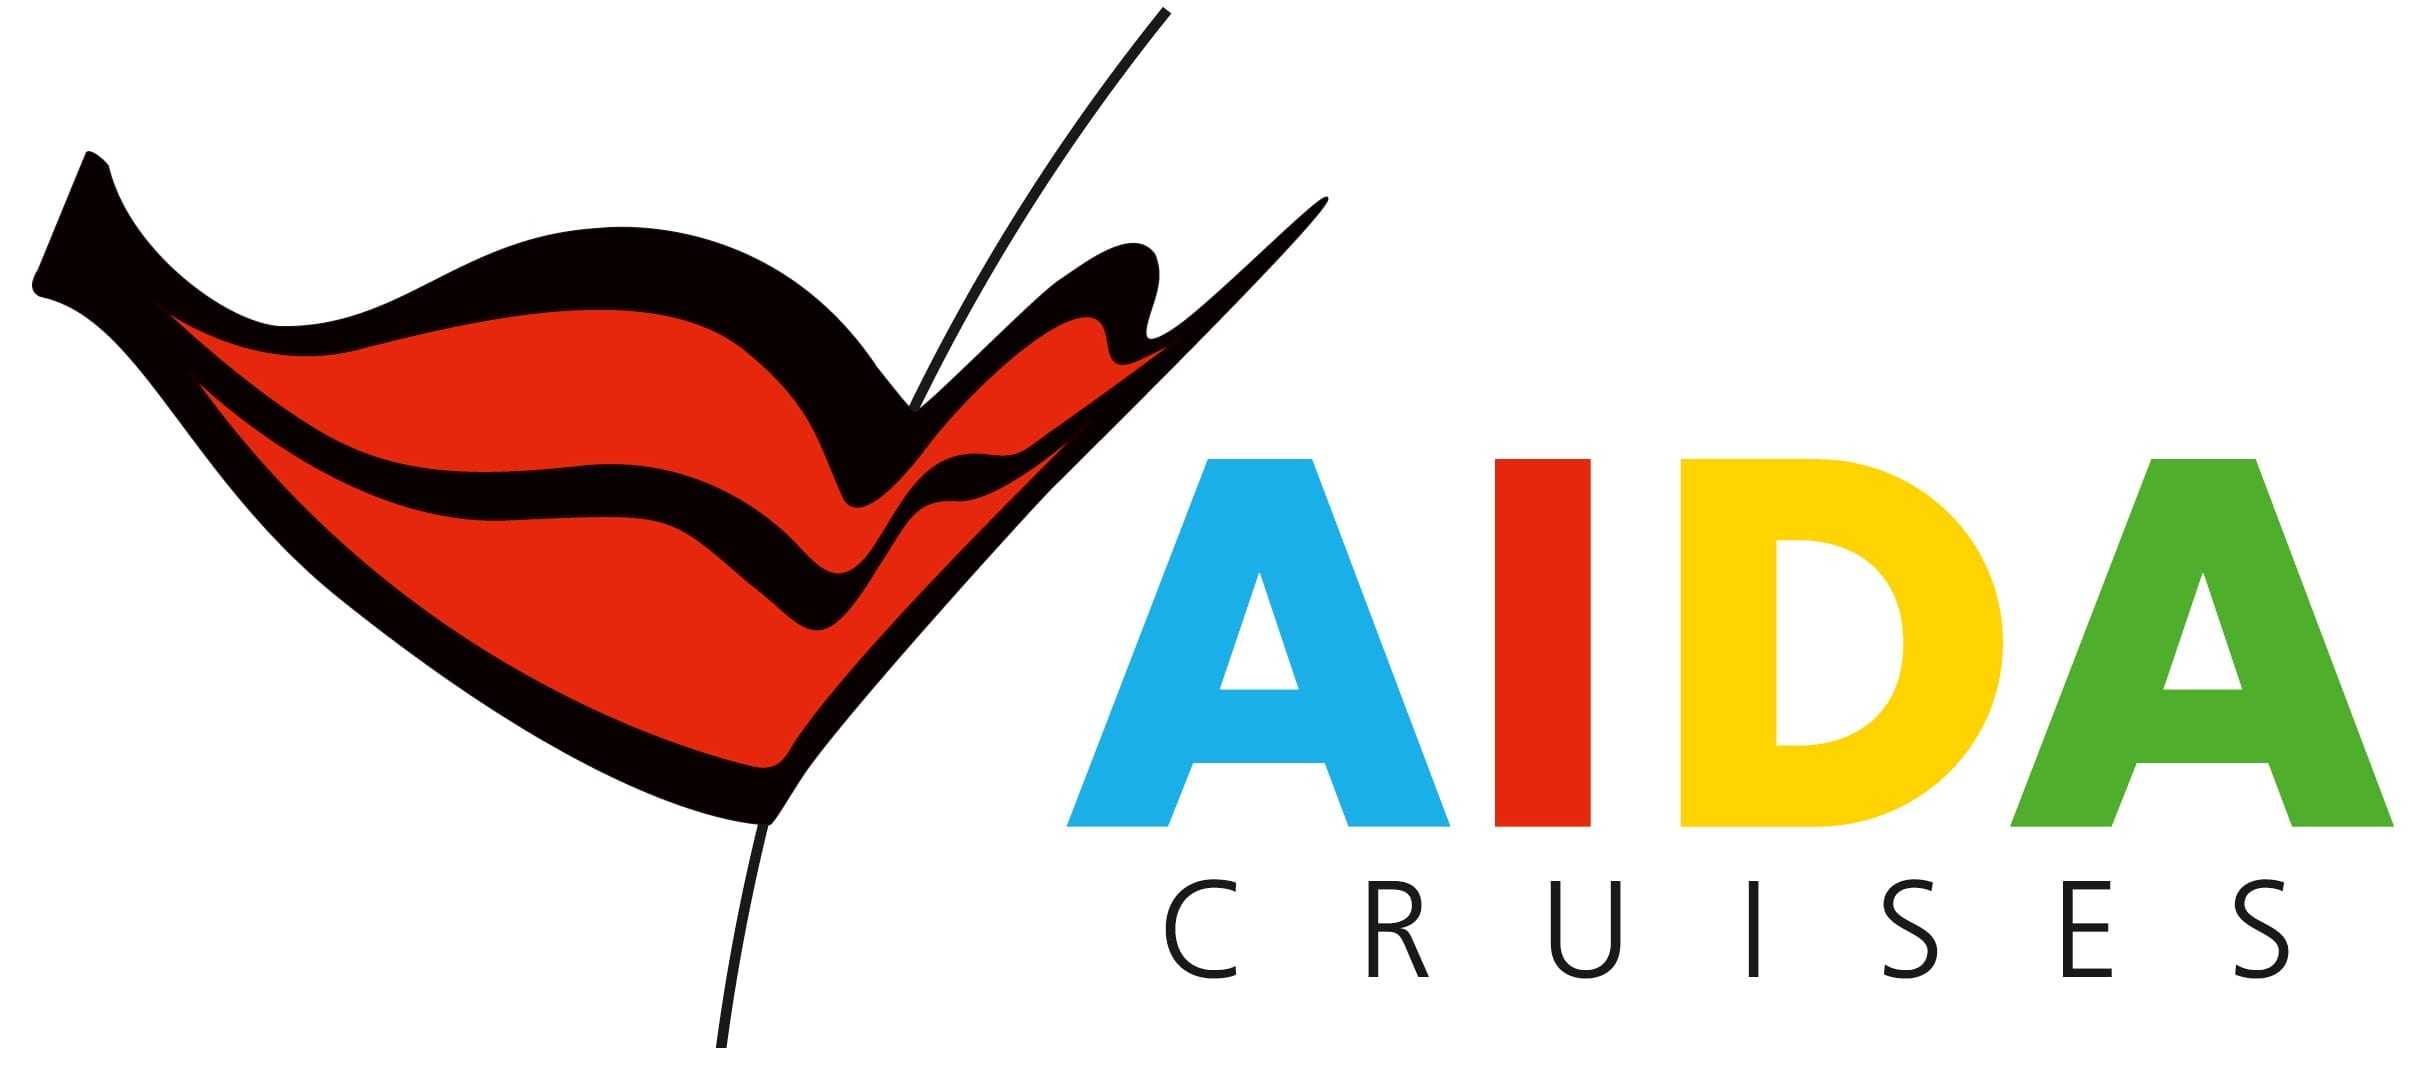 aida cruises logo